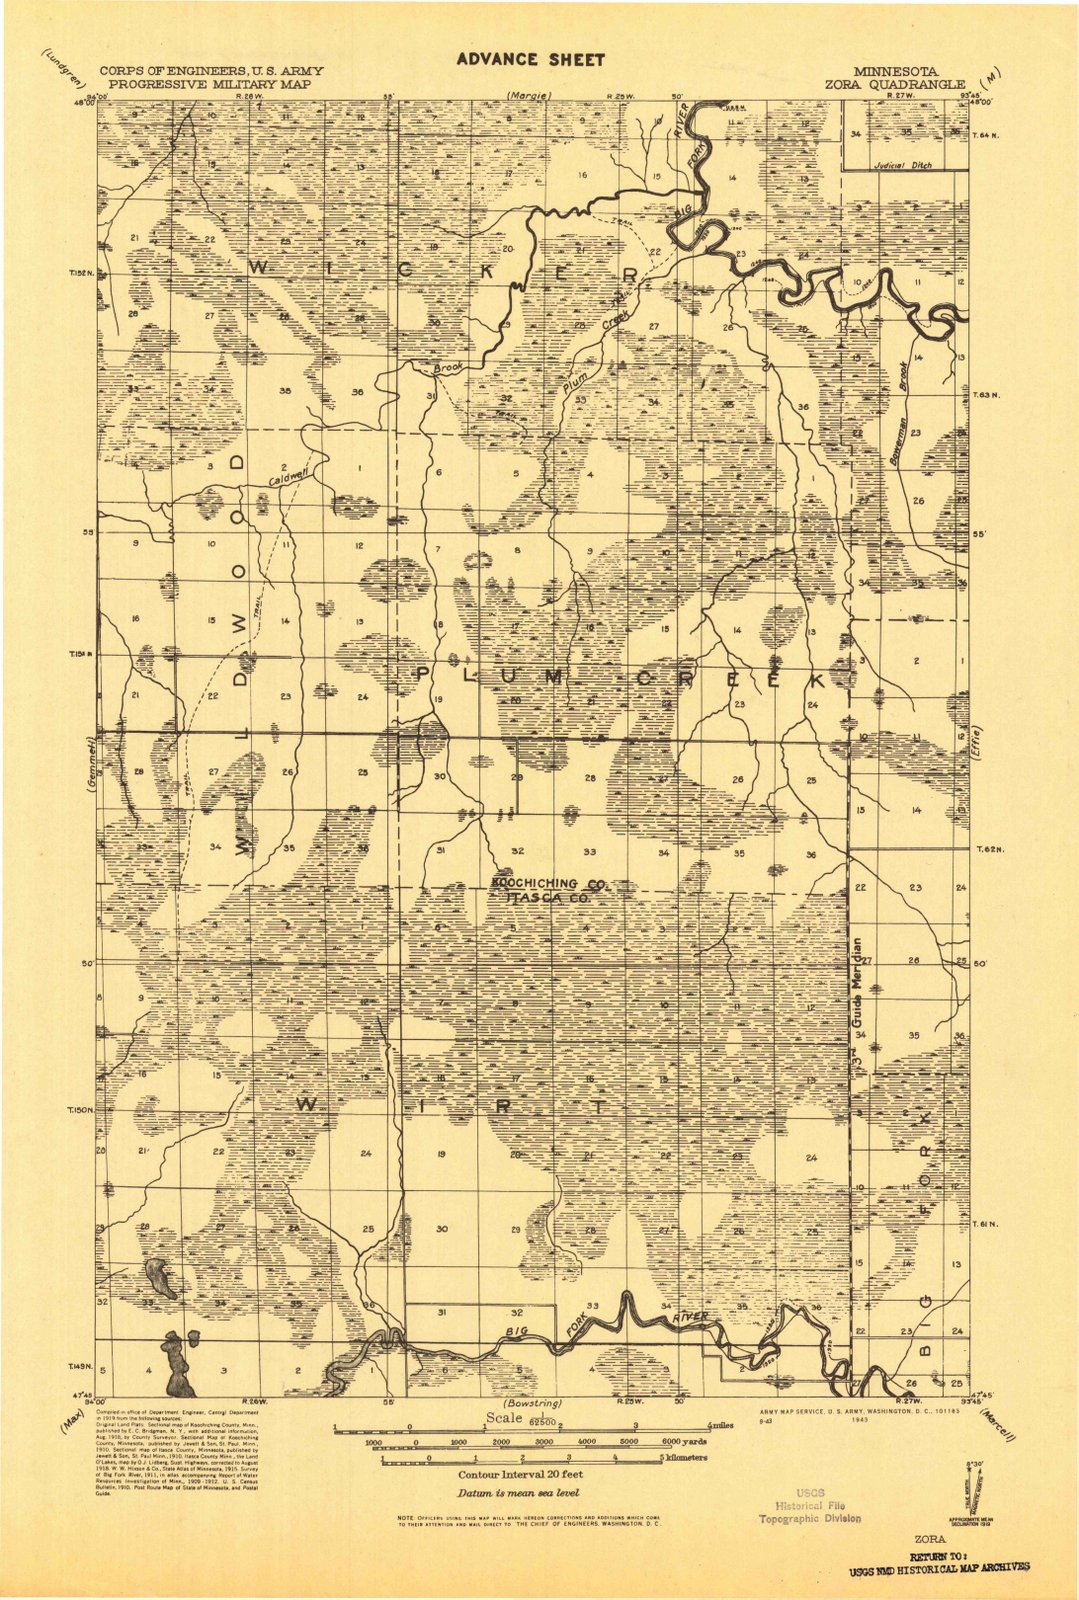 1918 Zora, MN - Minnesota - USGS Topographic Map